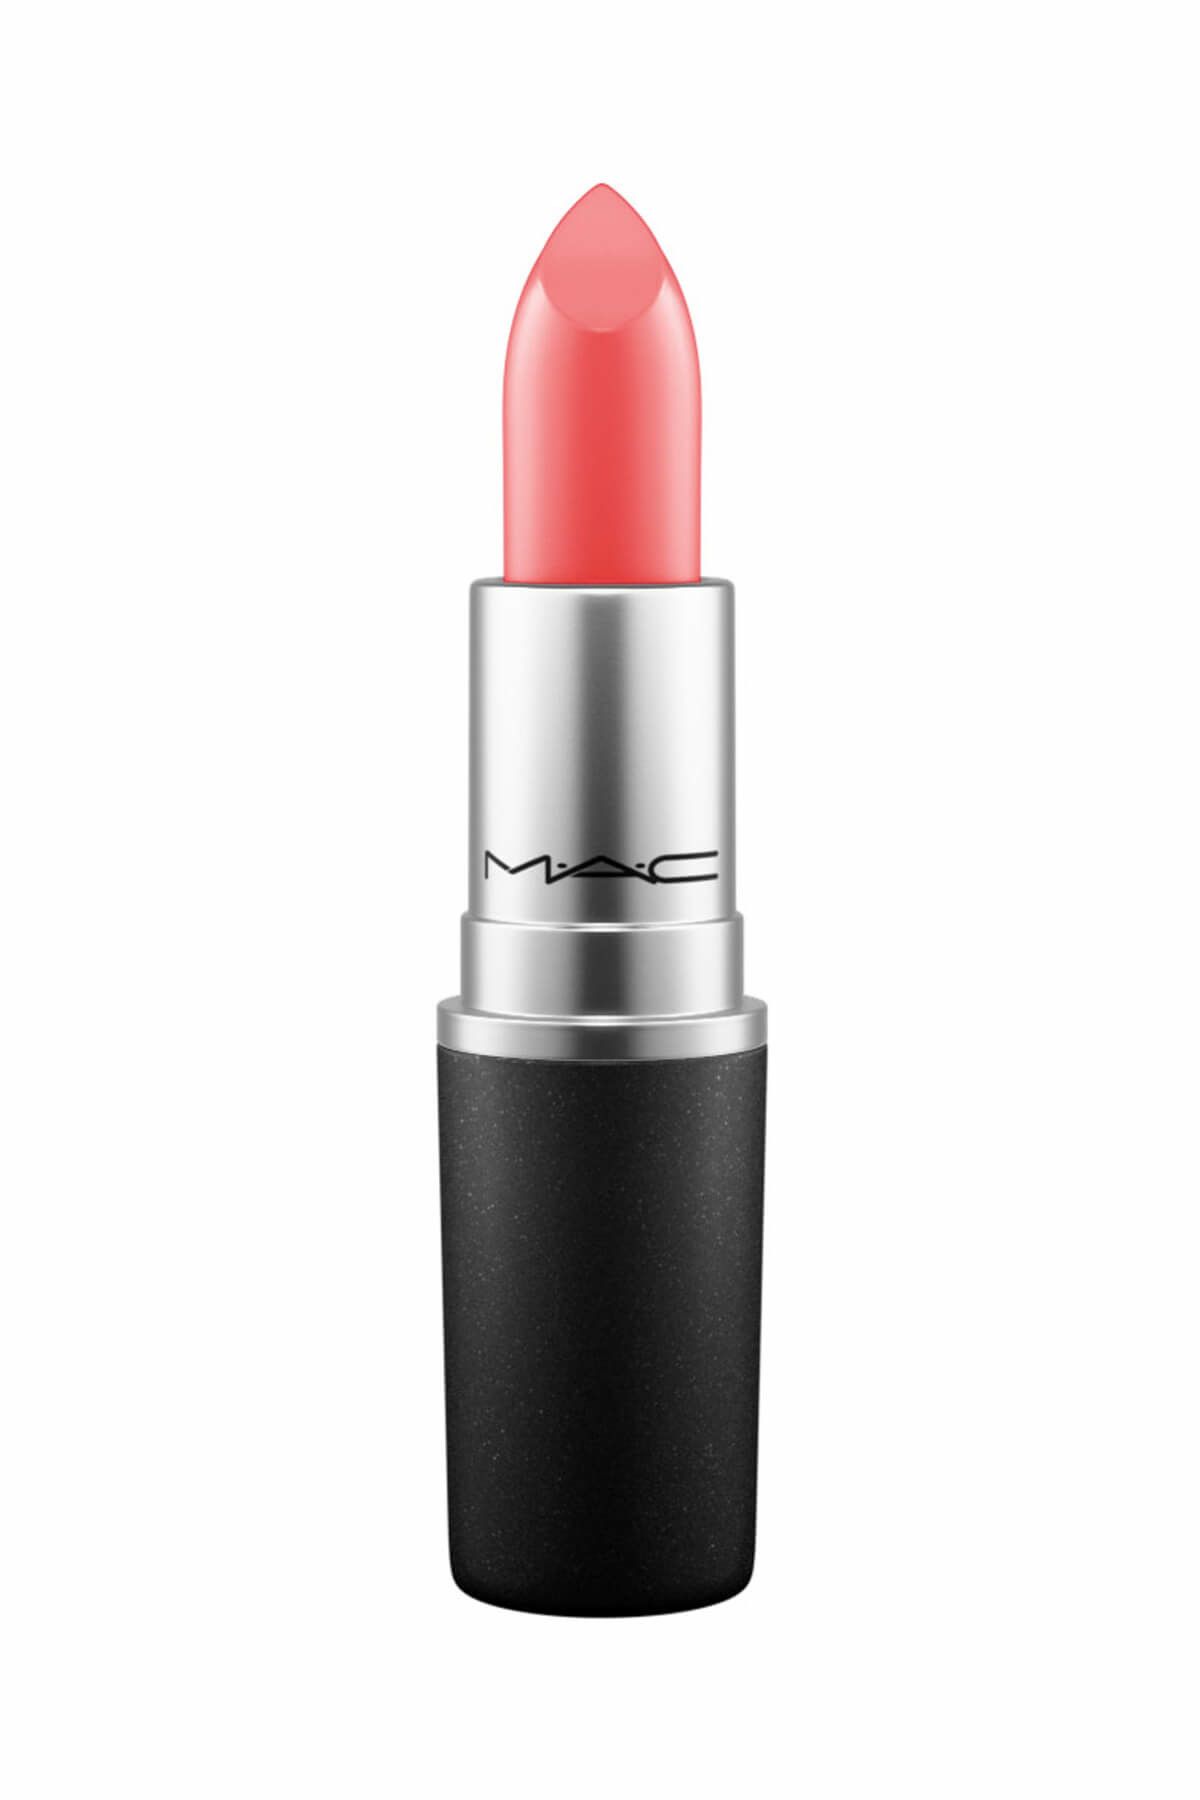 Mac Kremsi Ruj - Amplified Lipstick Vegas Volt 3 g 773602063574